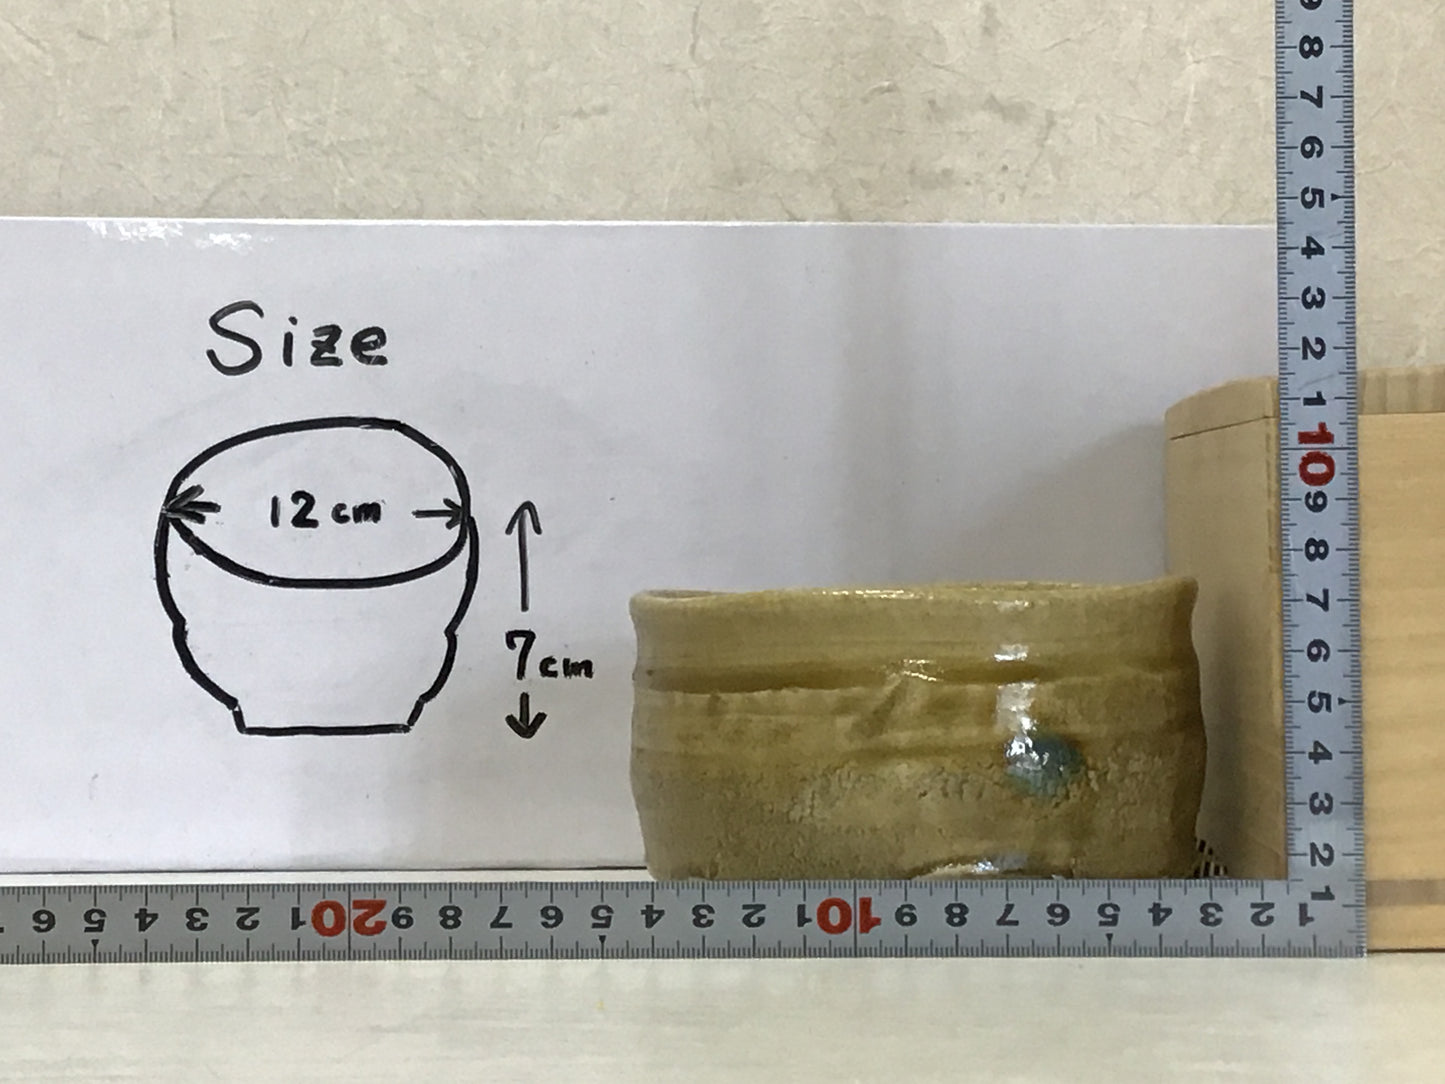 Y1582 CHAWAN Seto-ware yellow signed box Japanese bowl pottery tea ceremony